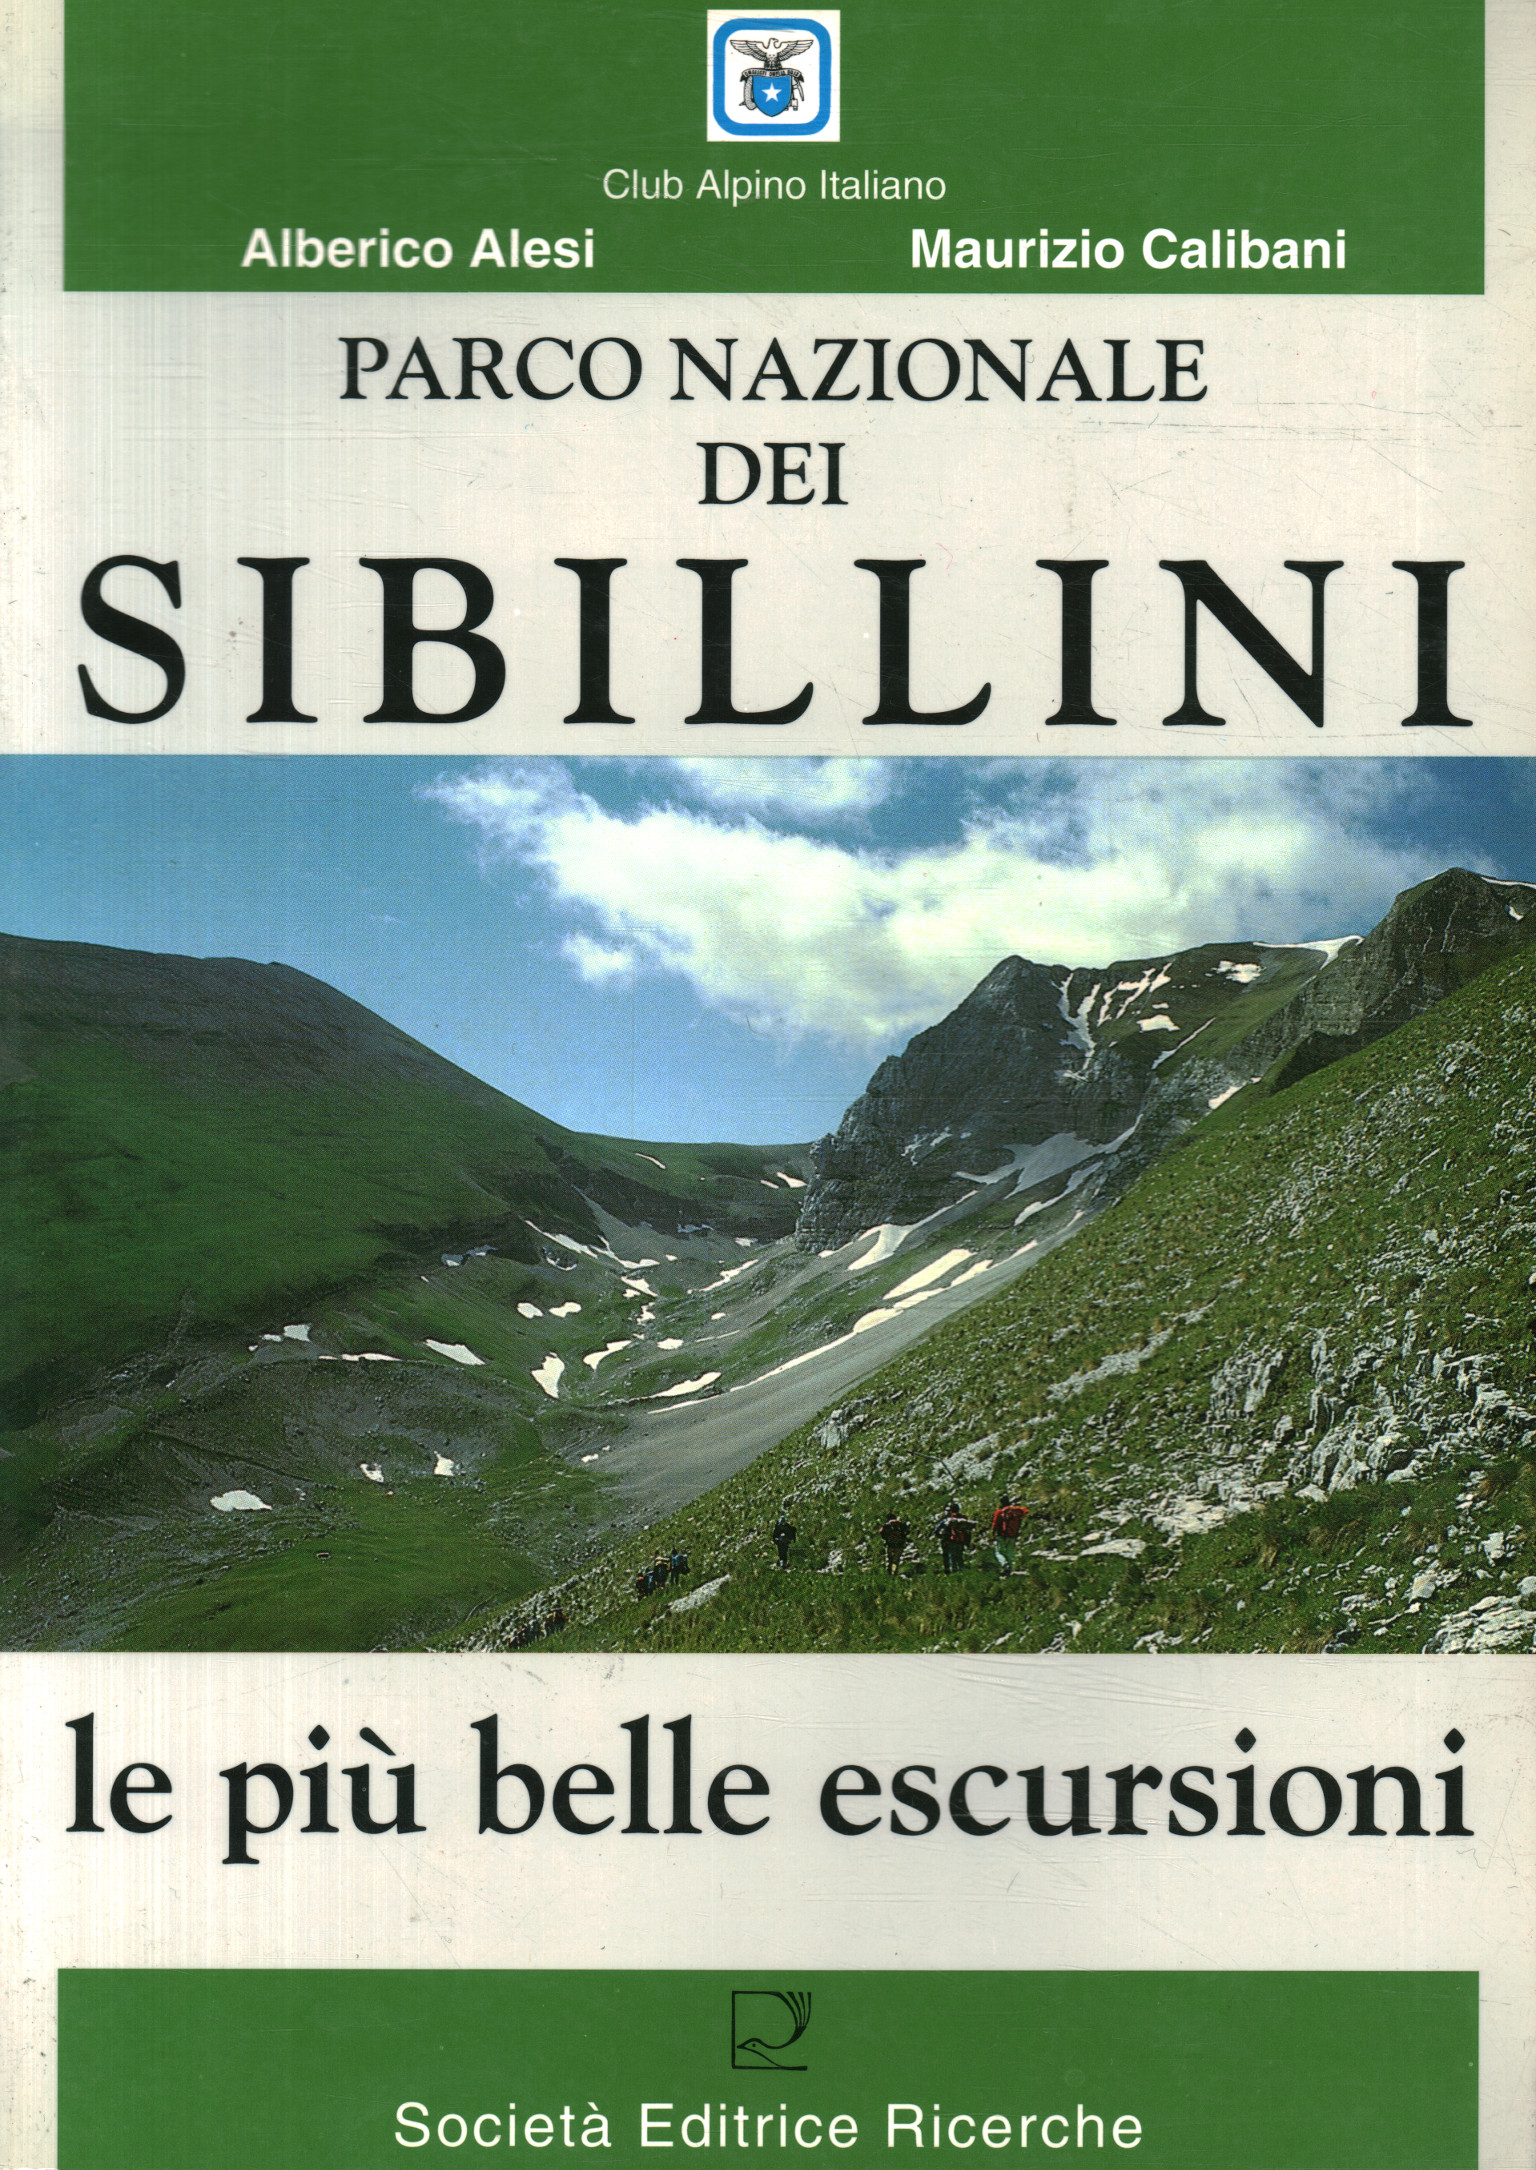 Nationalpark Sibillini